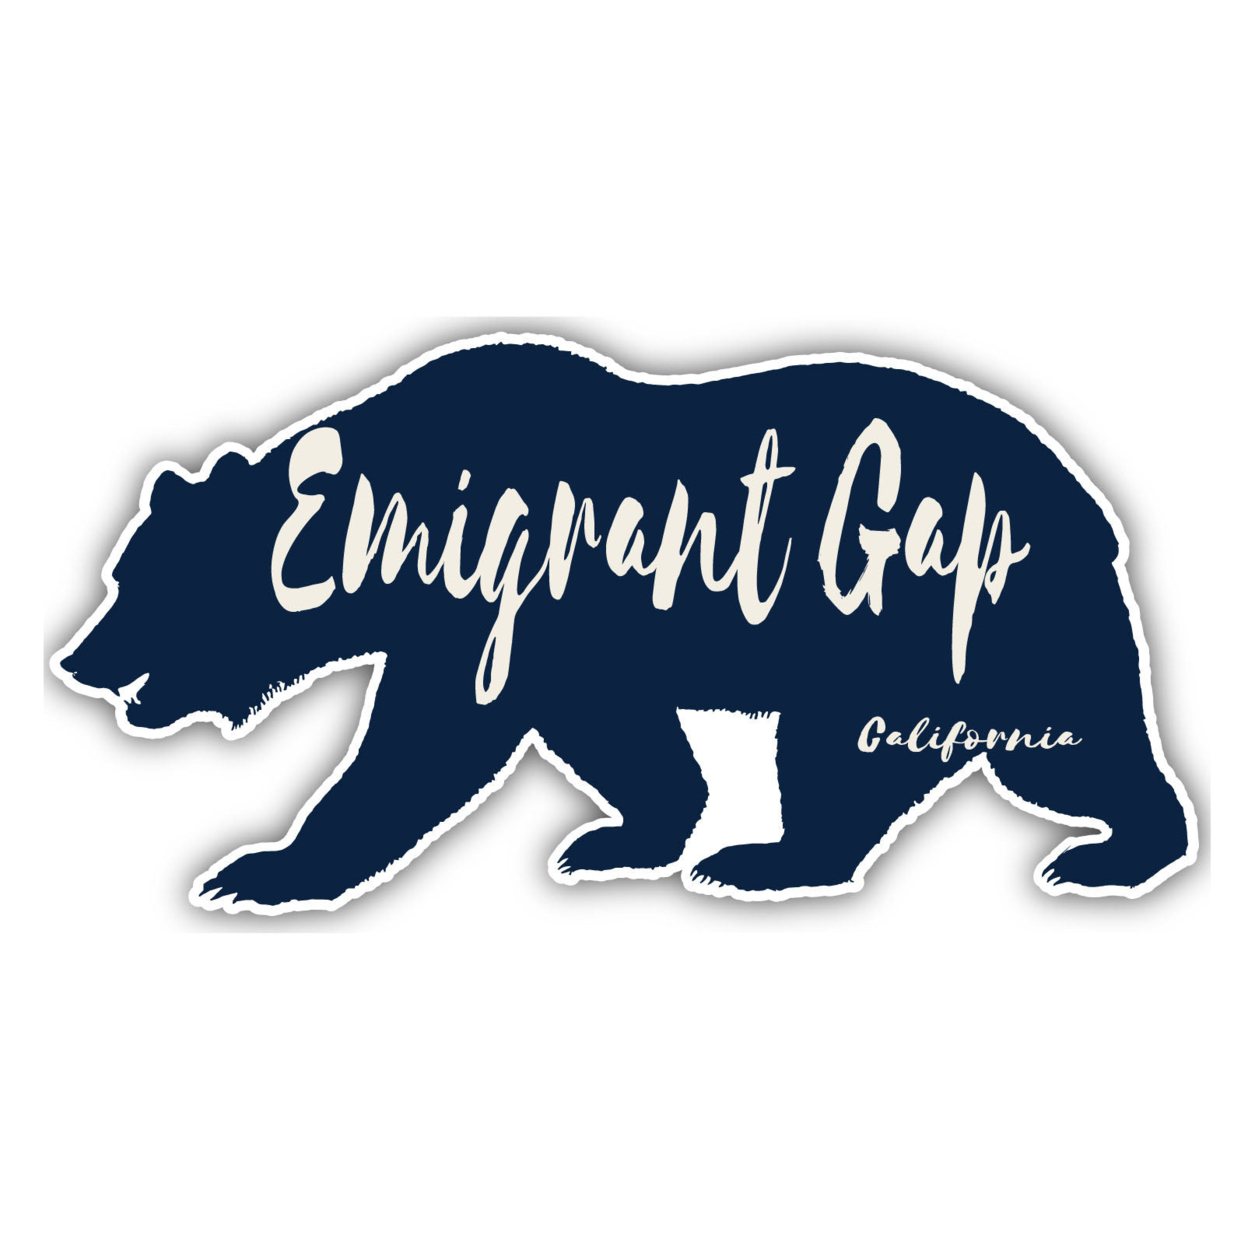 Emigrant Gap California Souvenir Decorative Stickers (Choose Theme And Size) - 4-Pack, 12-Inch, Bear